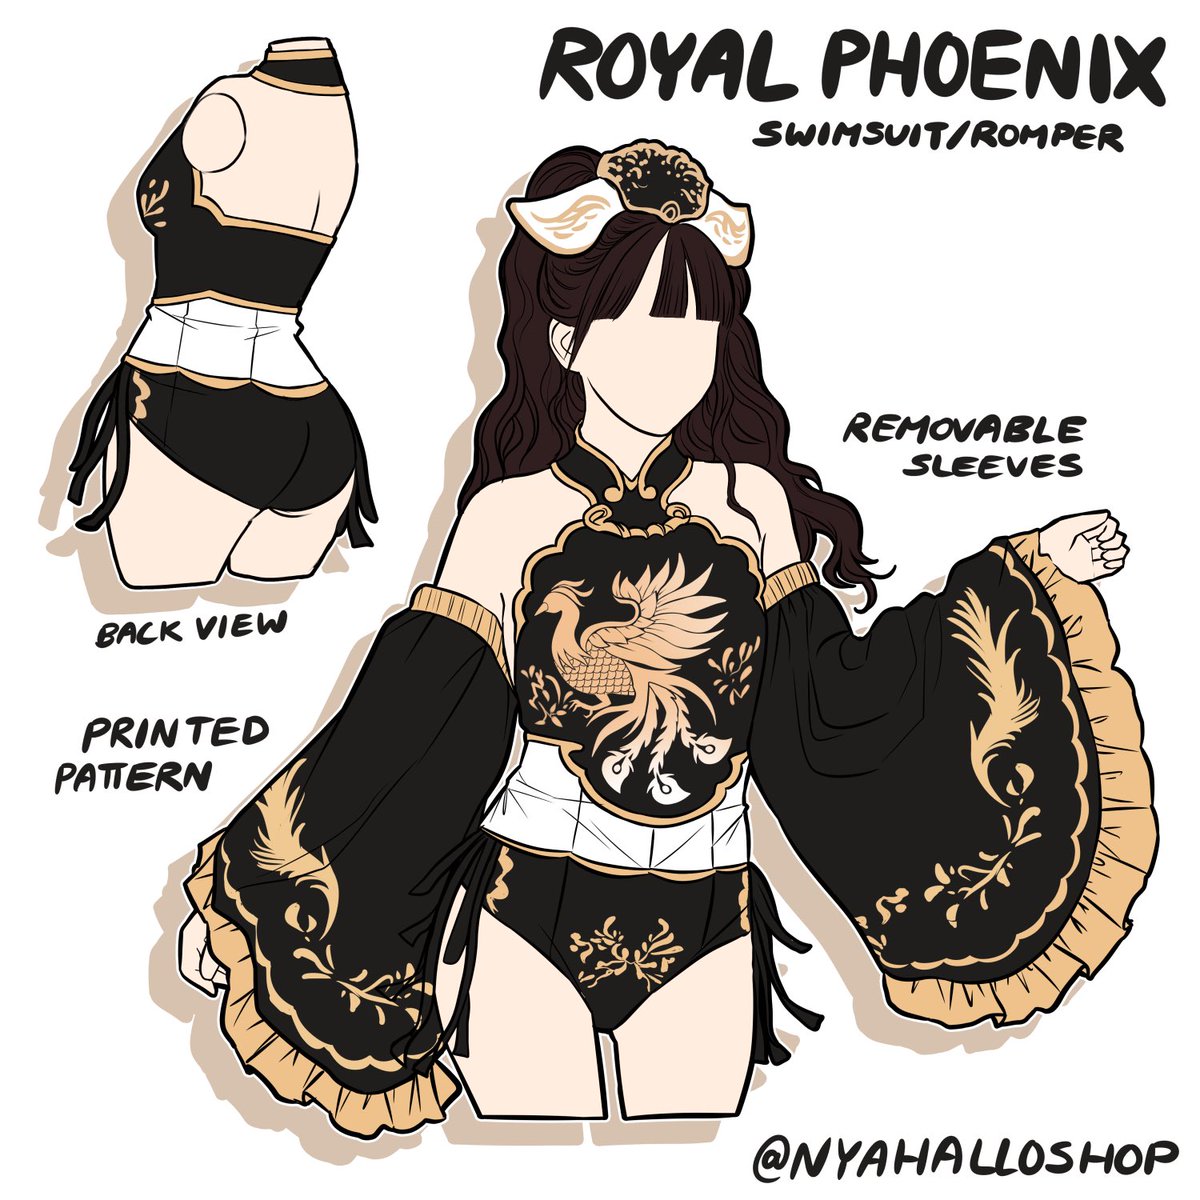 Royal phoenix swimsuit/romper 🖤